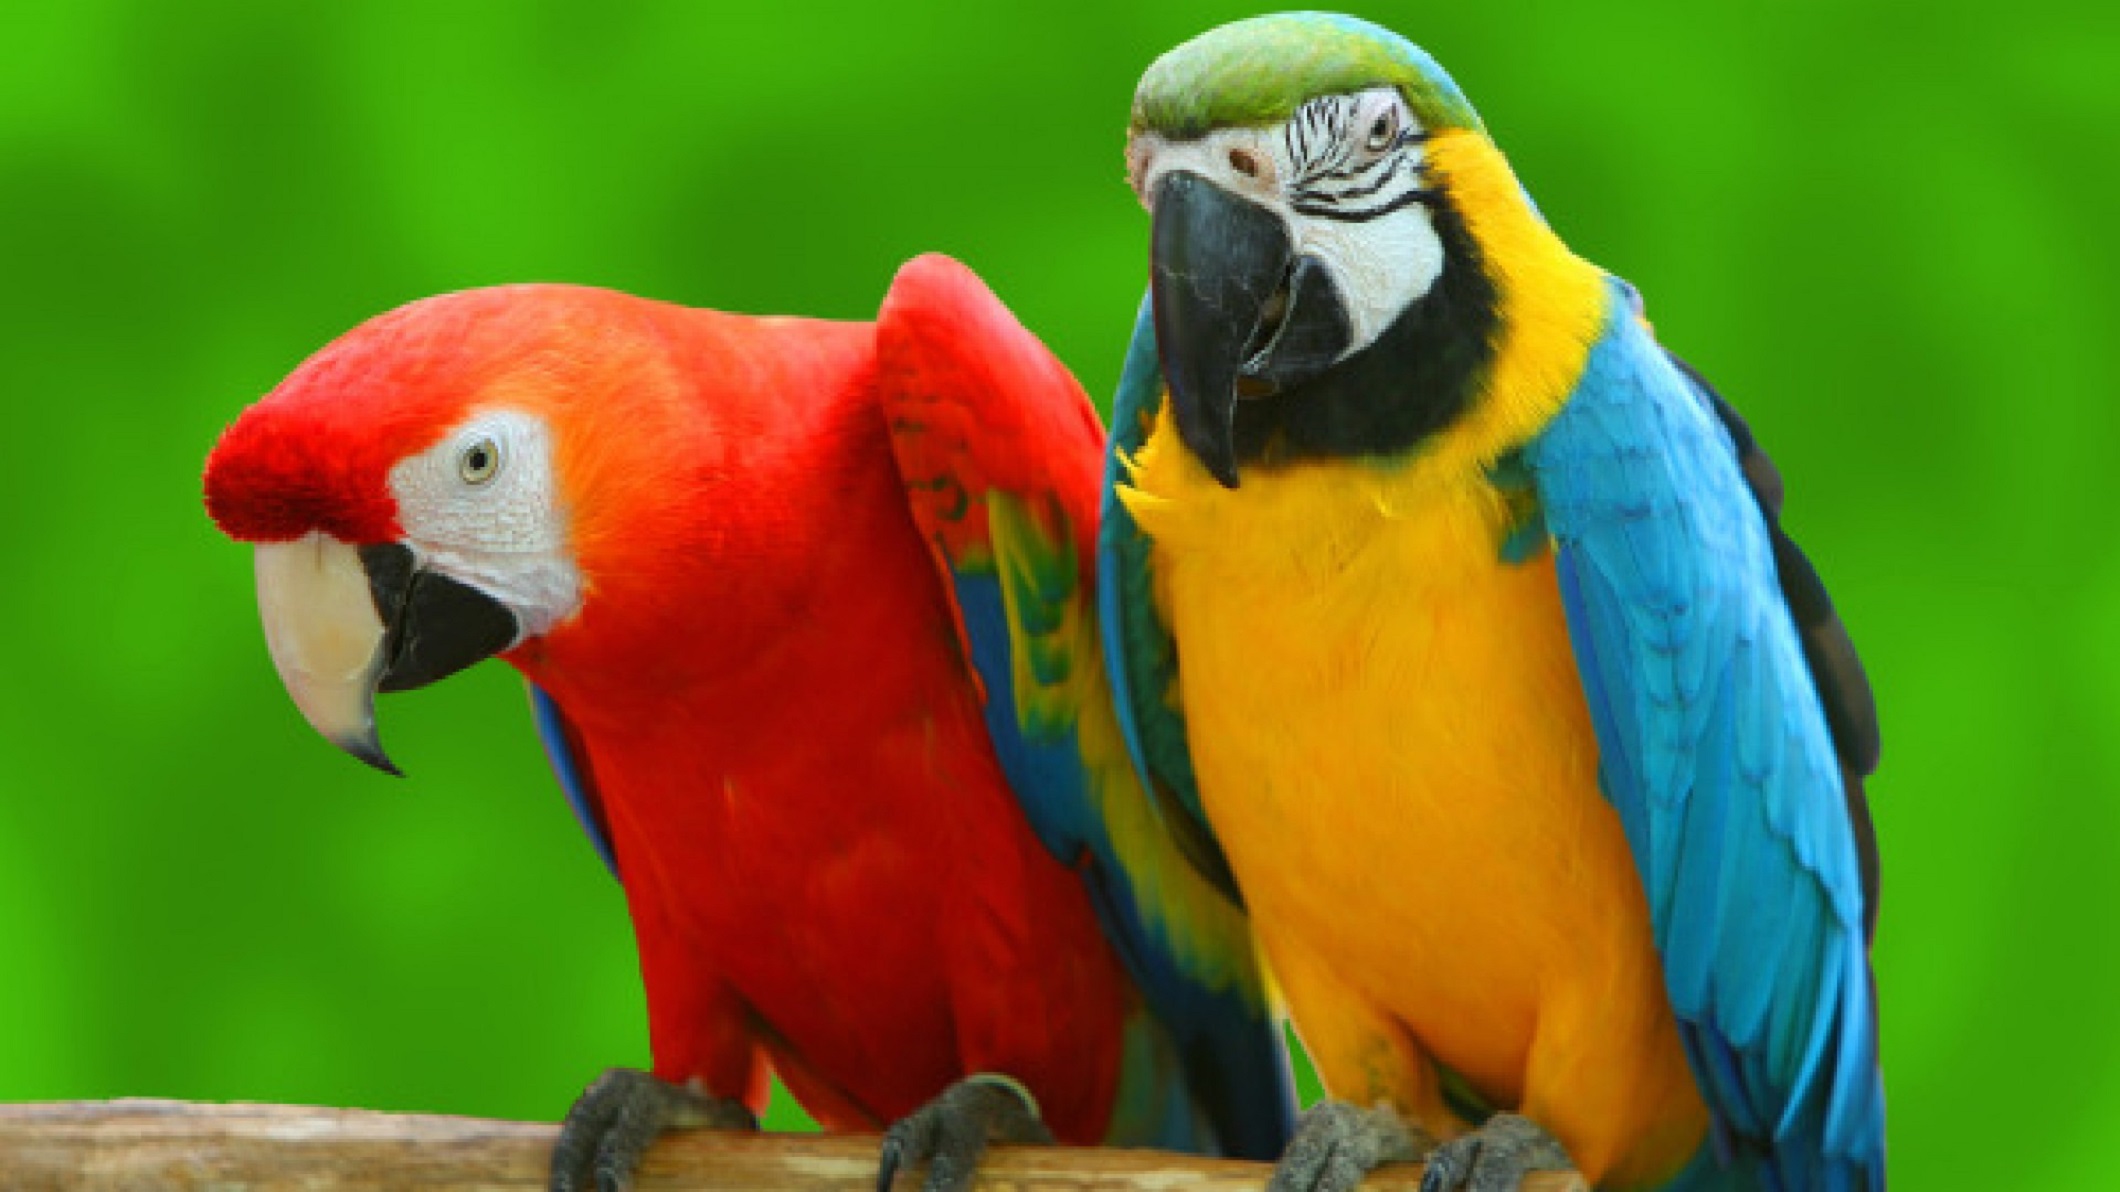 beautiful parrot images 2017